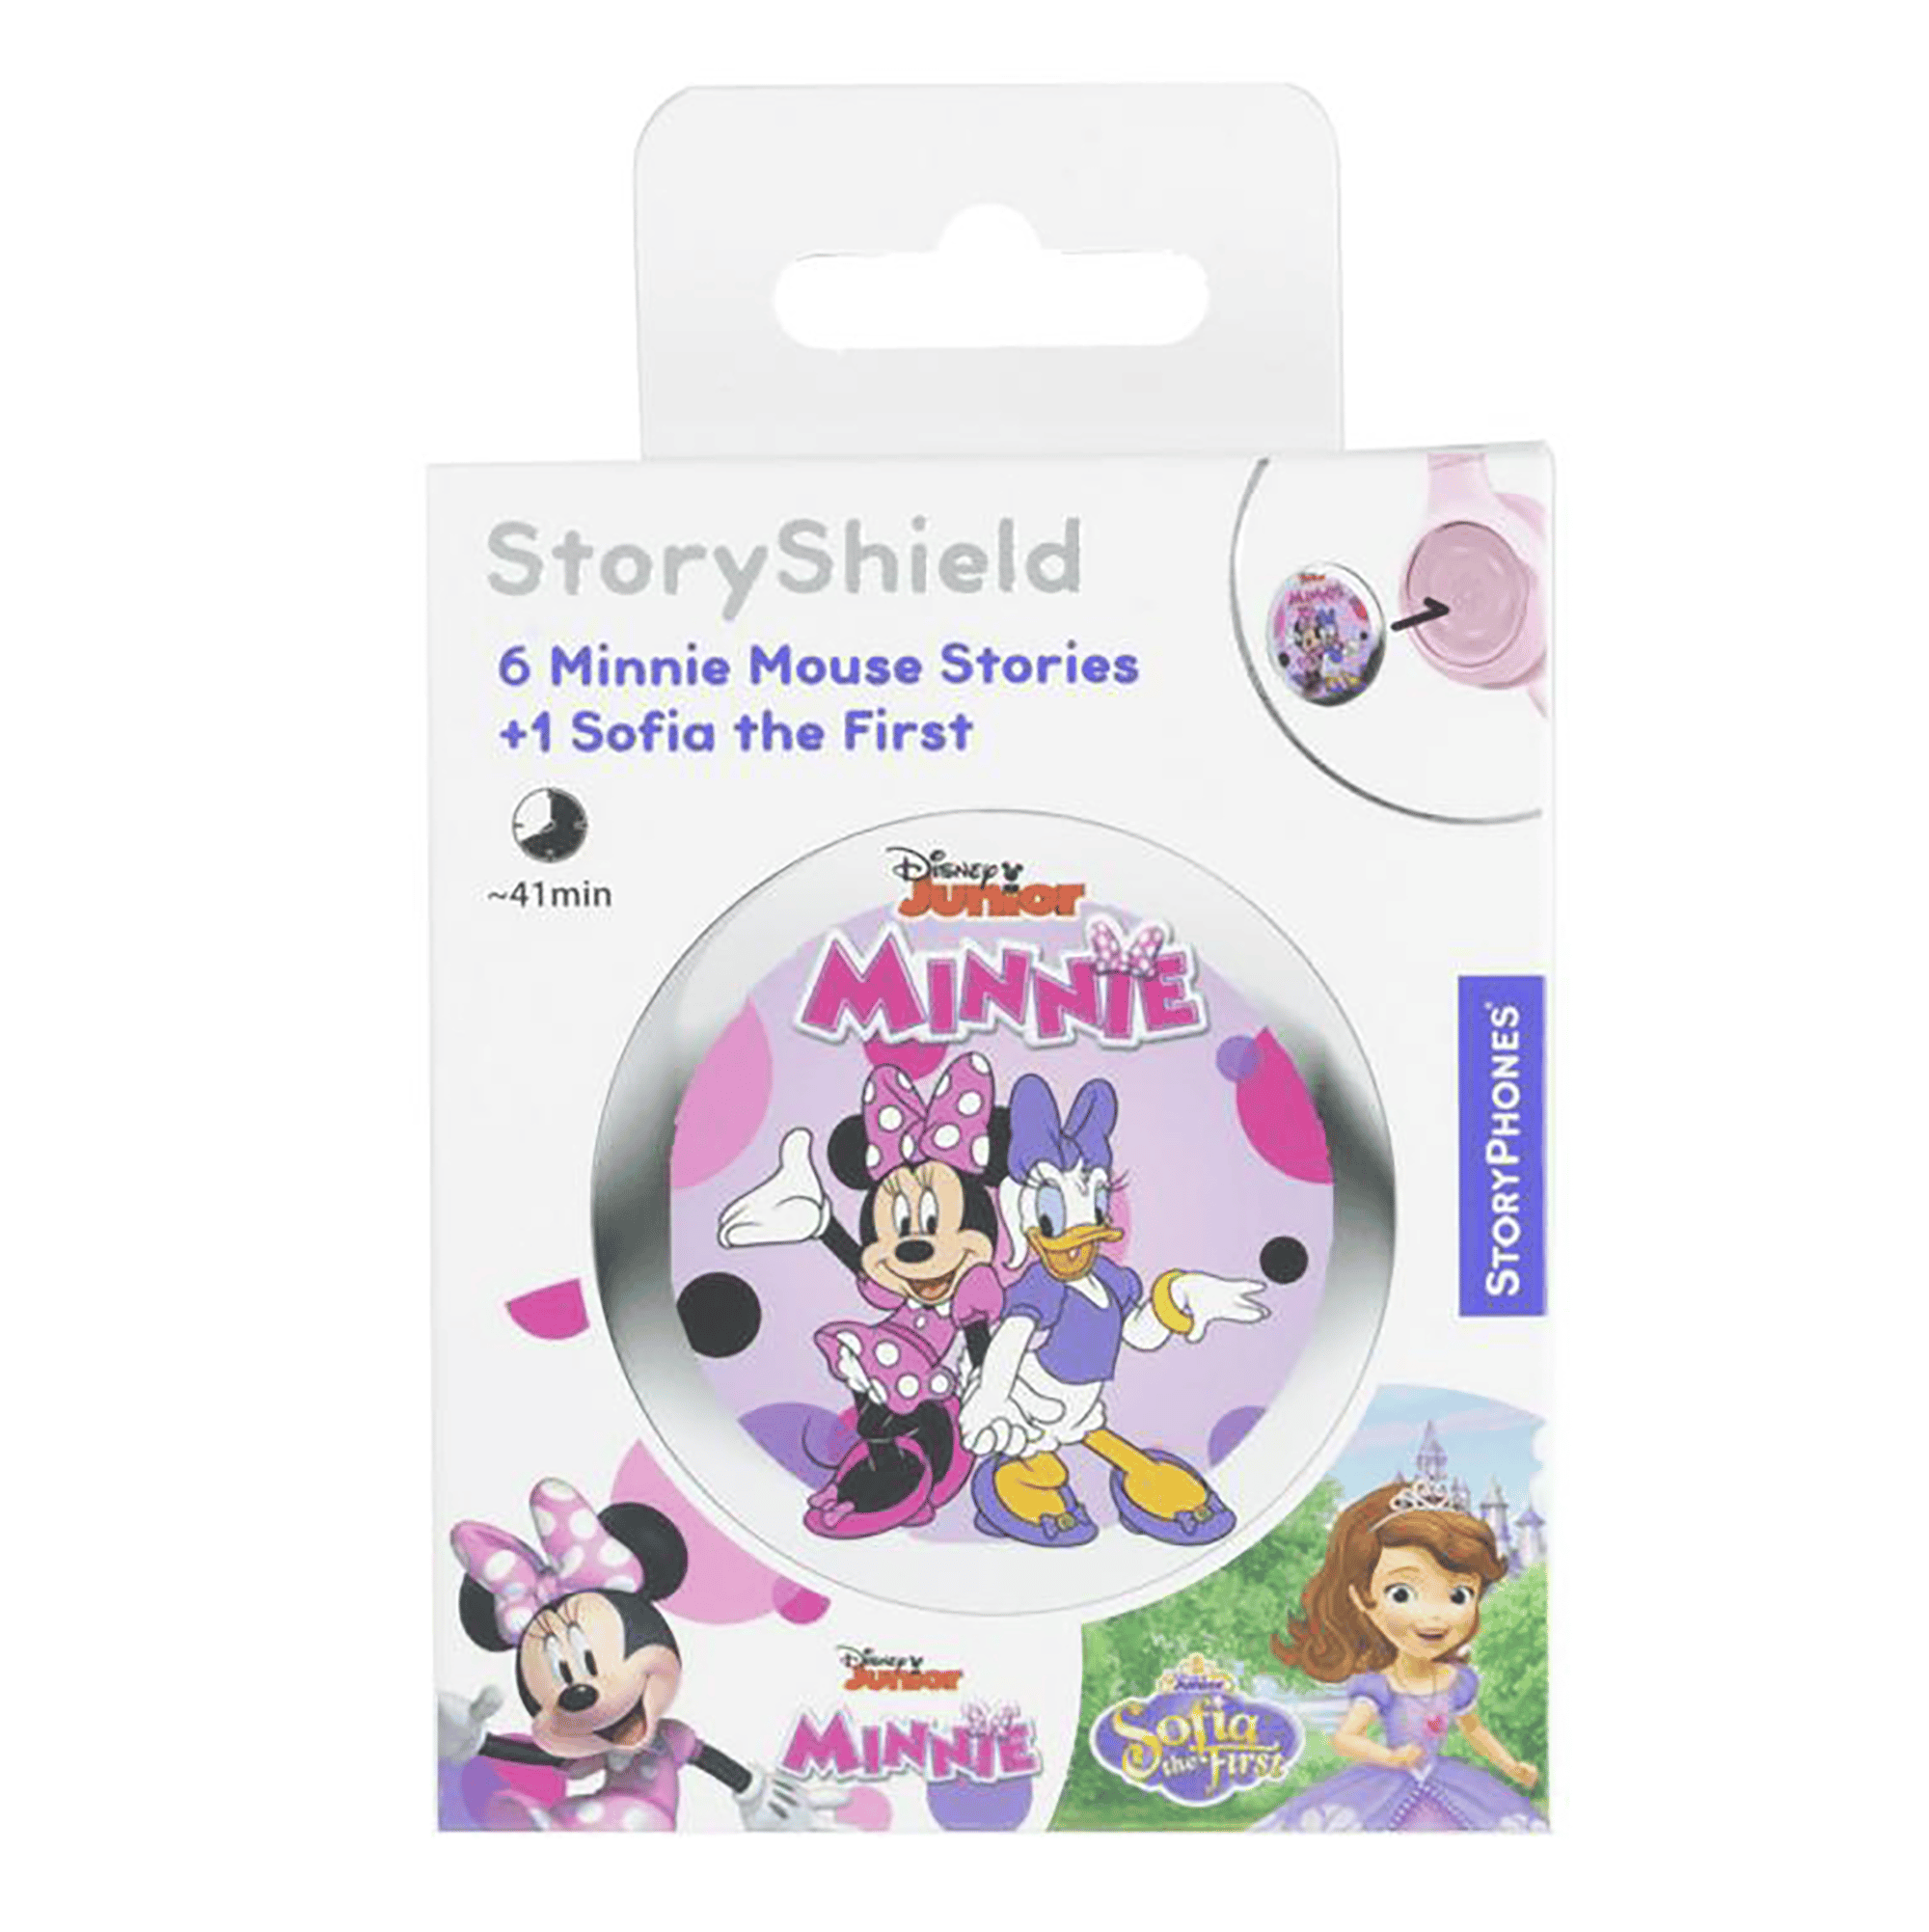 StoryShield Disney Collection - Minnie Mouse onanoff Pink 2000583661504 2